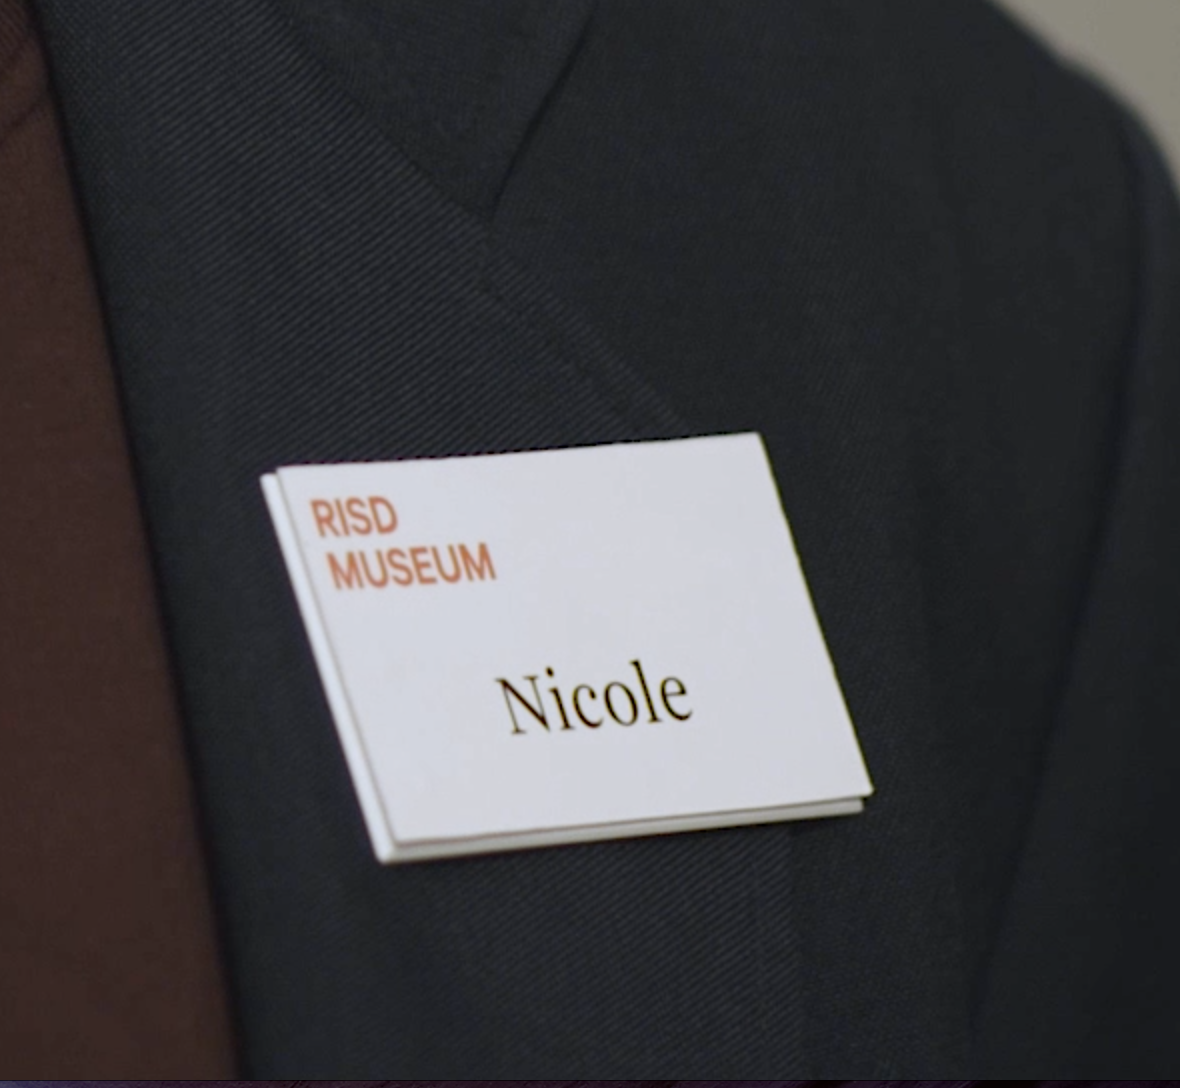 RISD Museum nametag that says "Nicole"